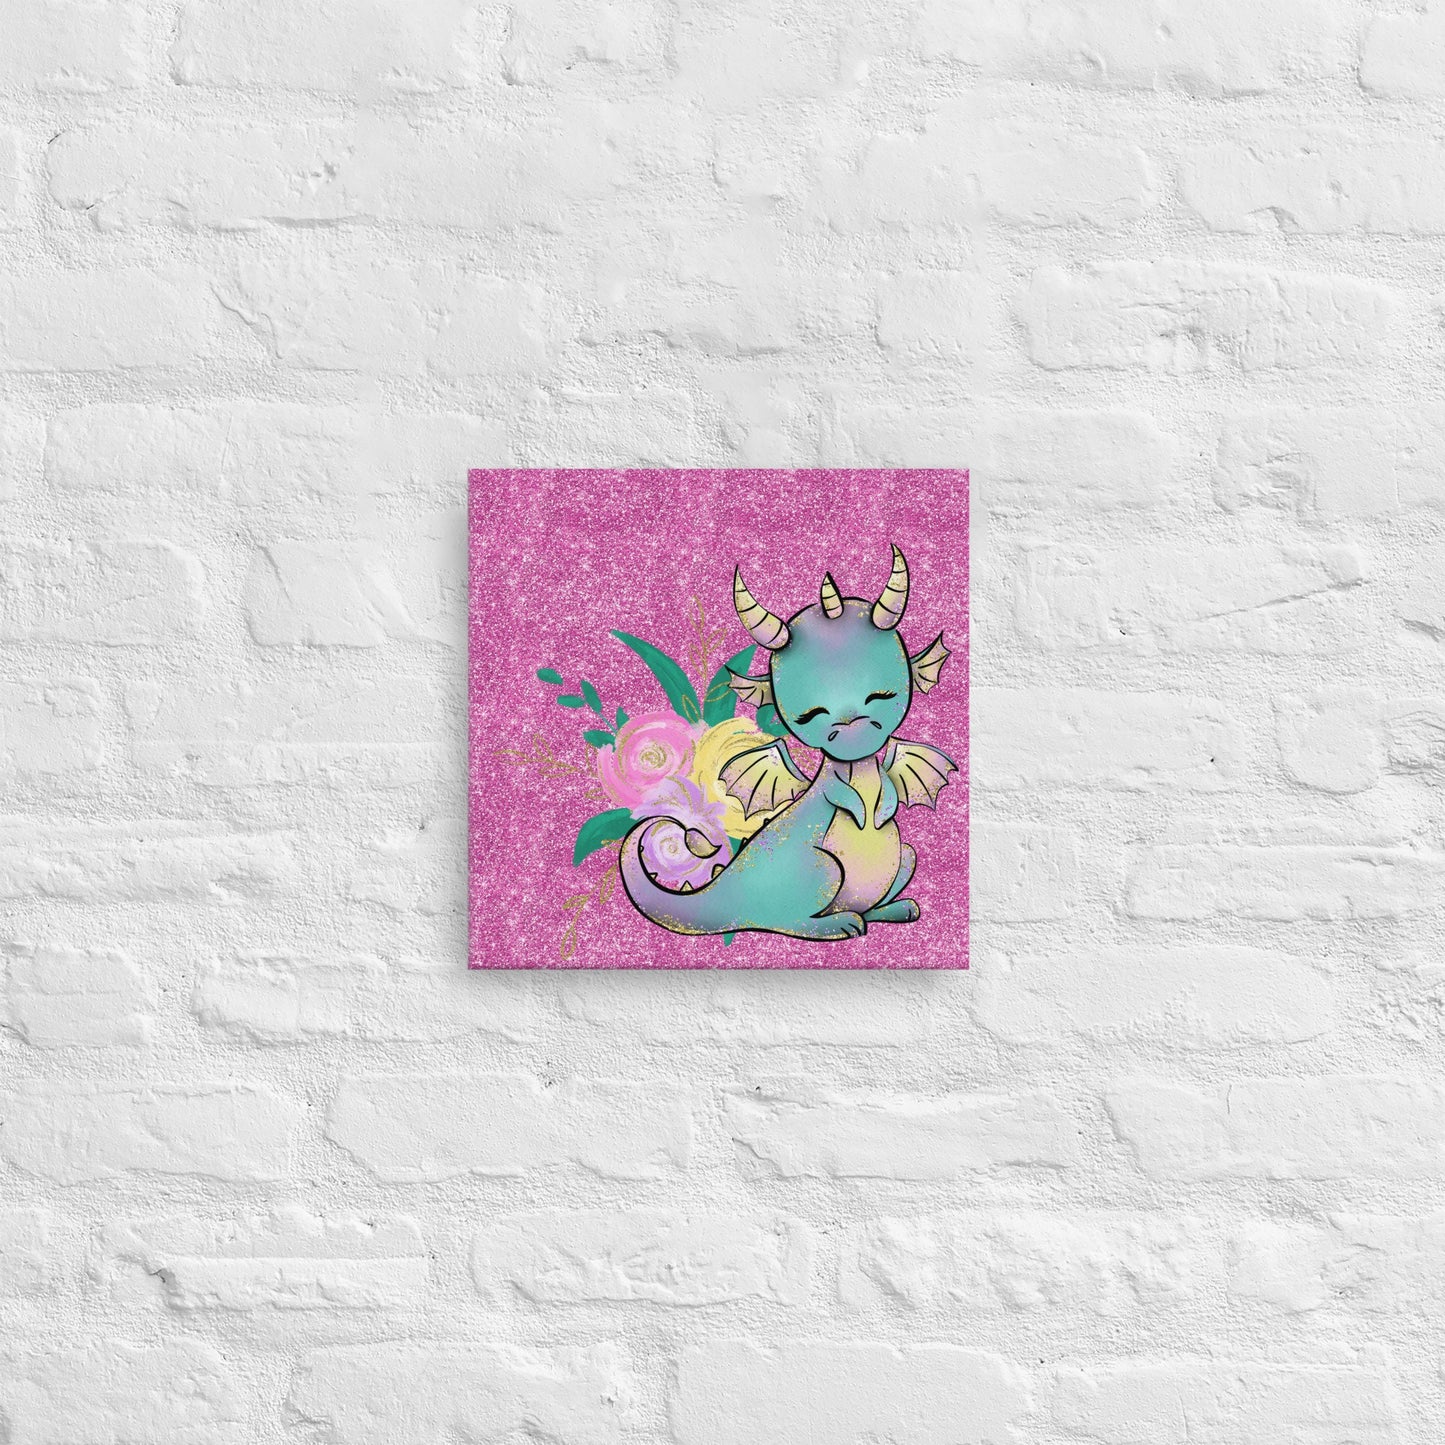 Personalized Canvas - Nursery Kids Room Wall Art - Dragon Pink